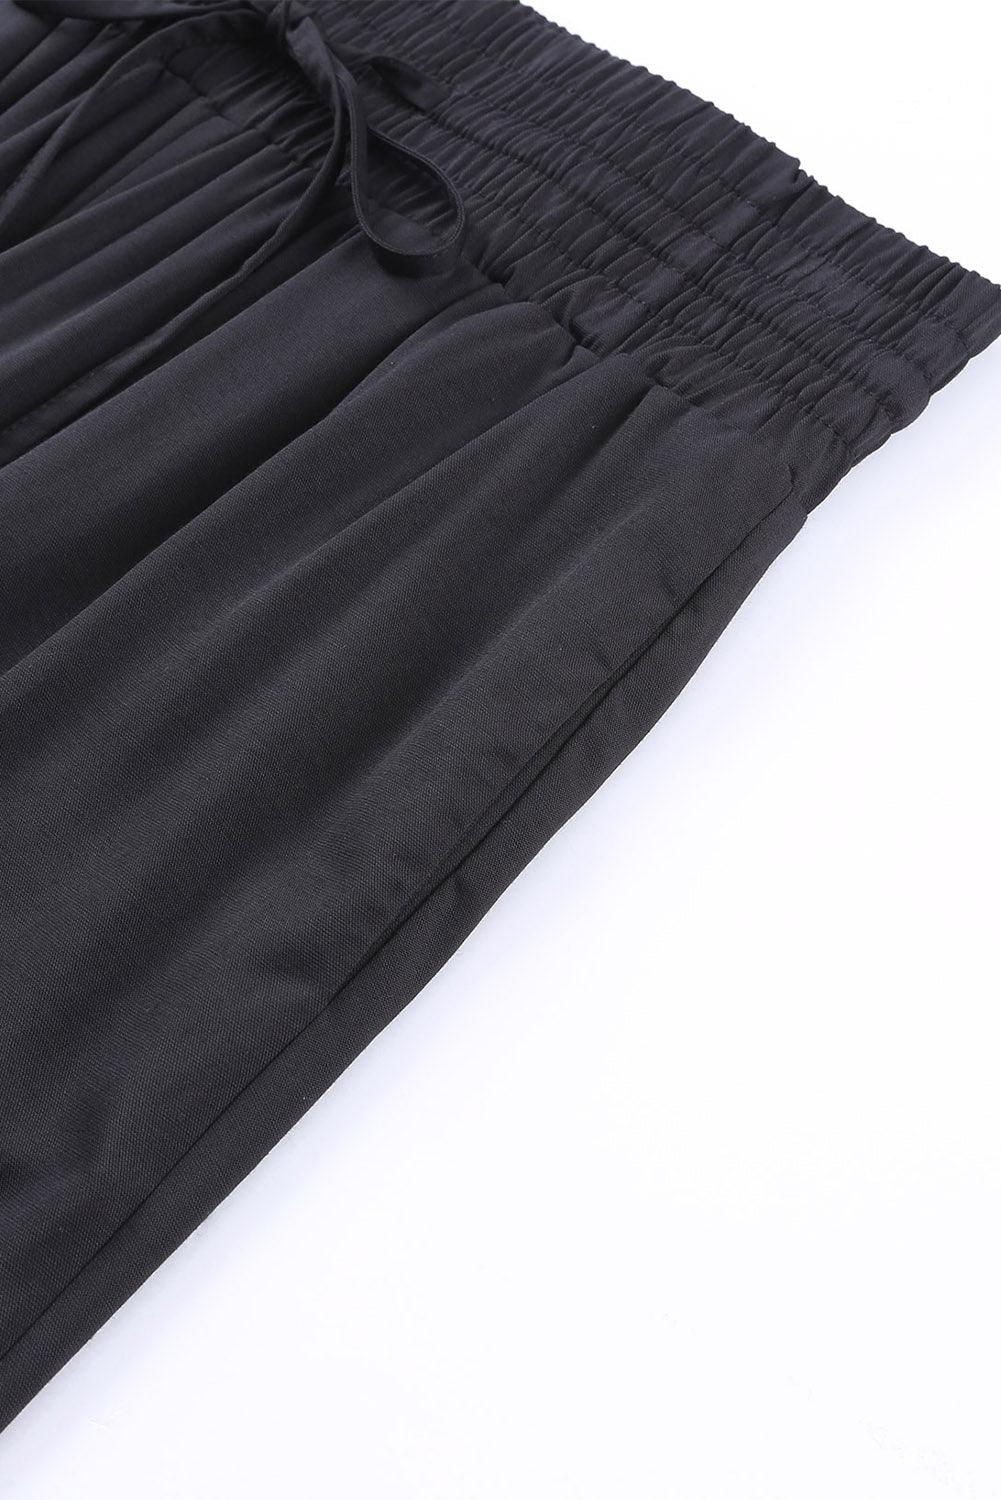 Womens Solid Elastic High Waist Wide Leg Summer Casual Black Pants